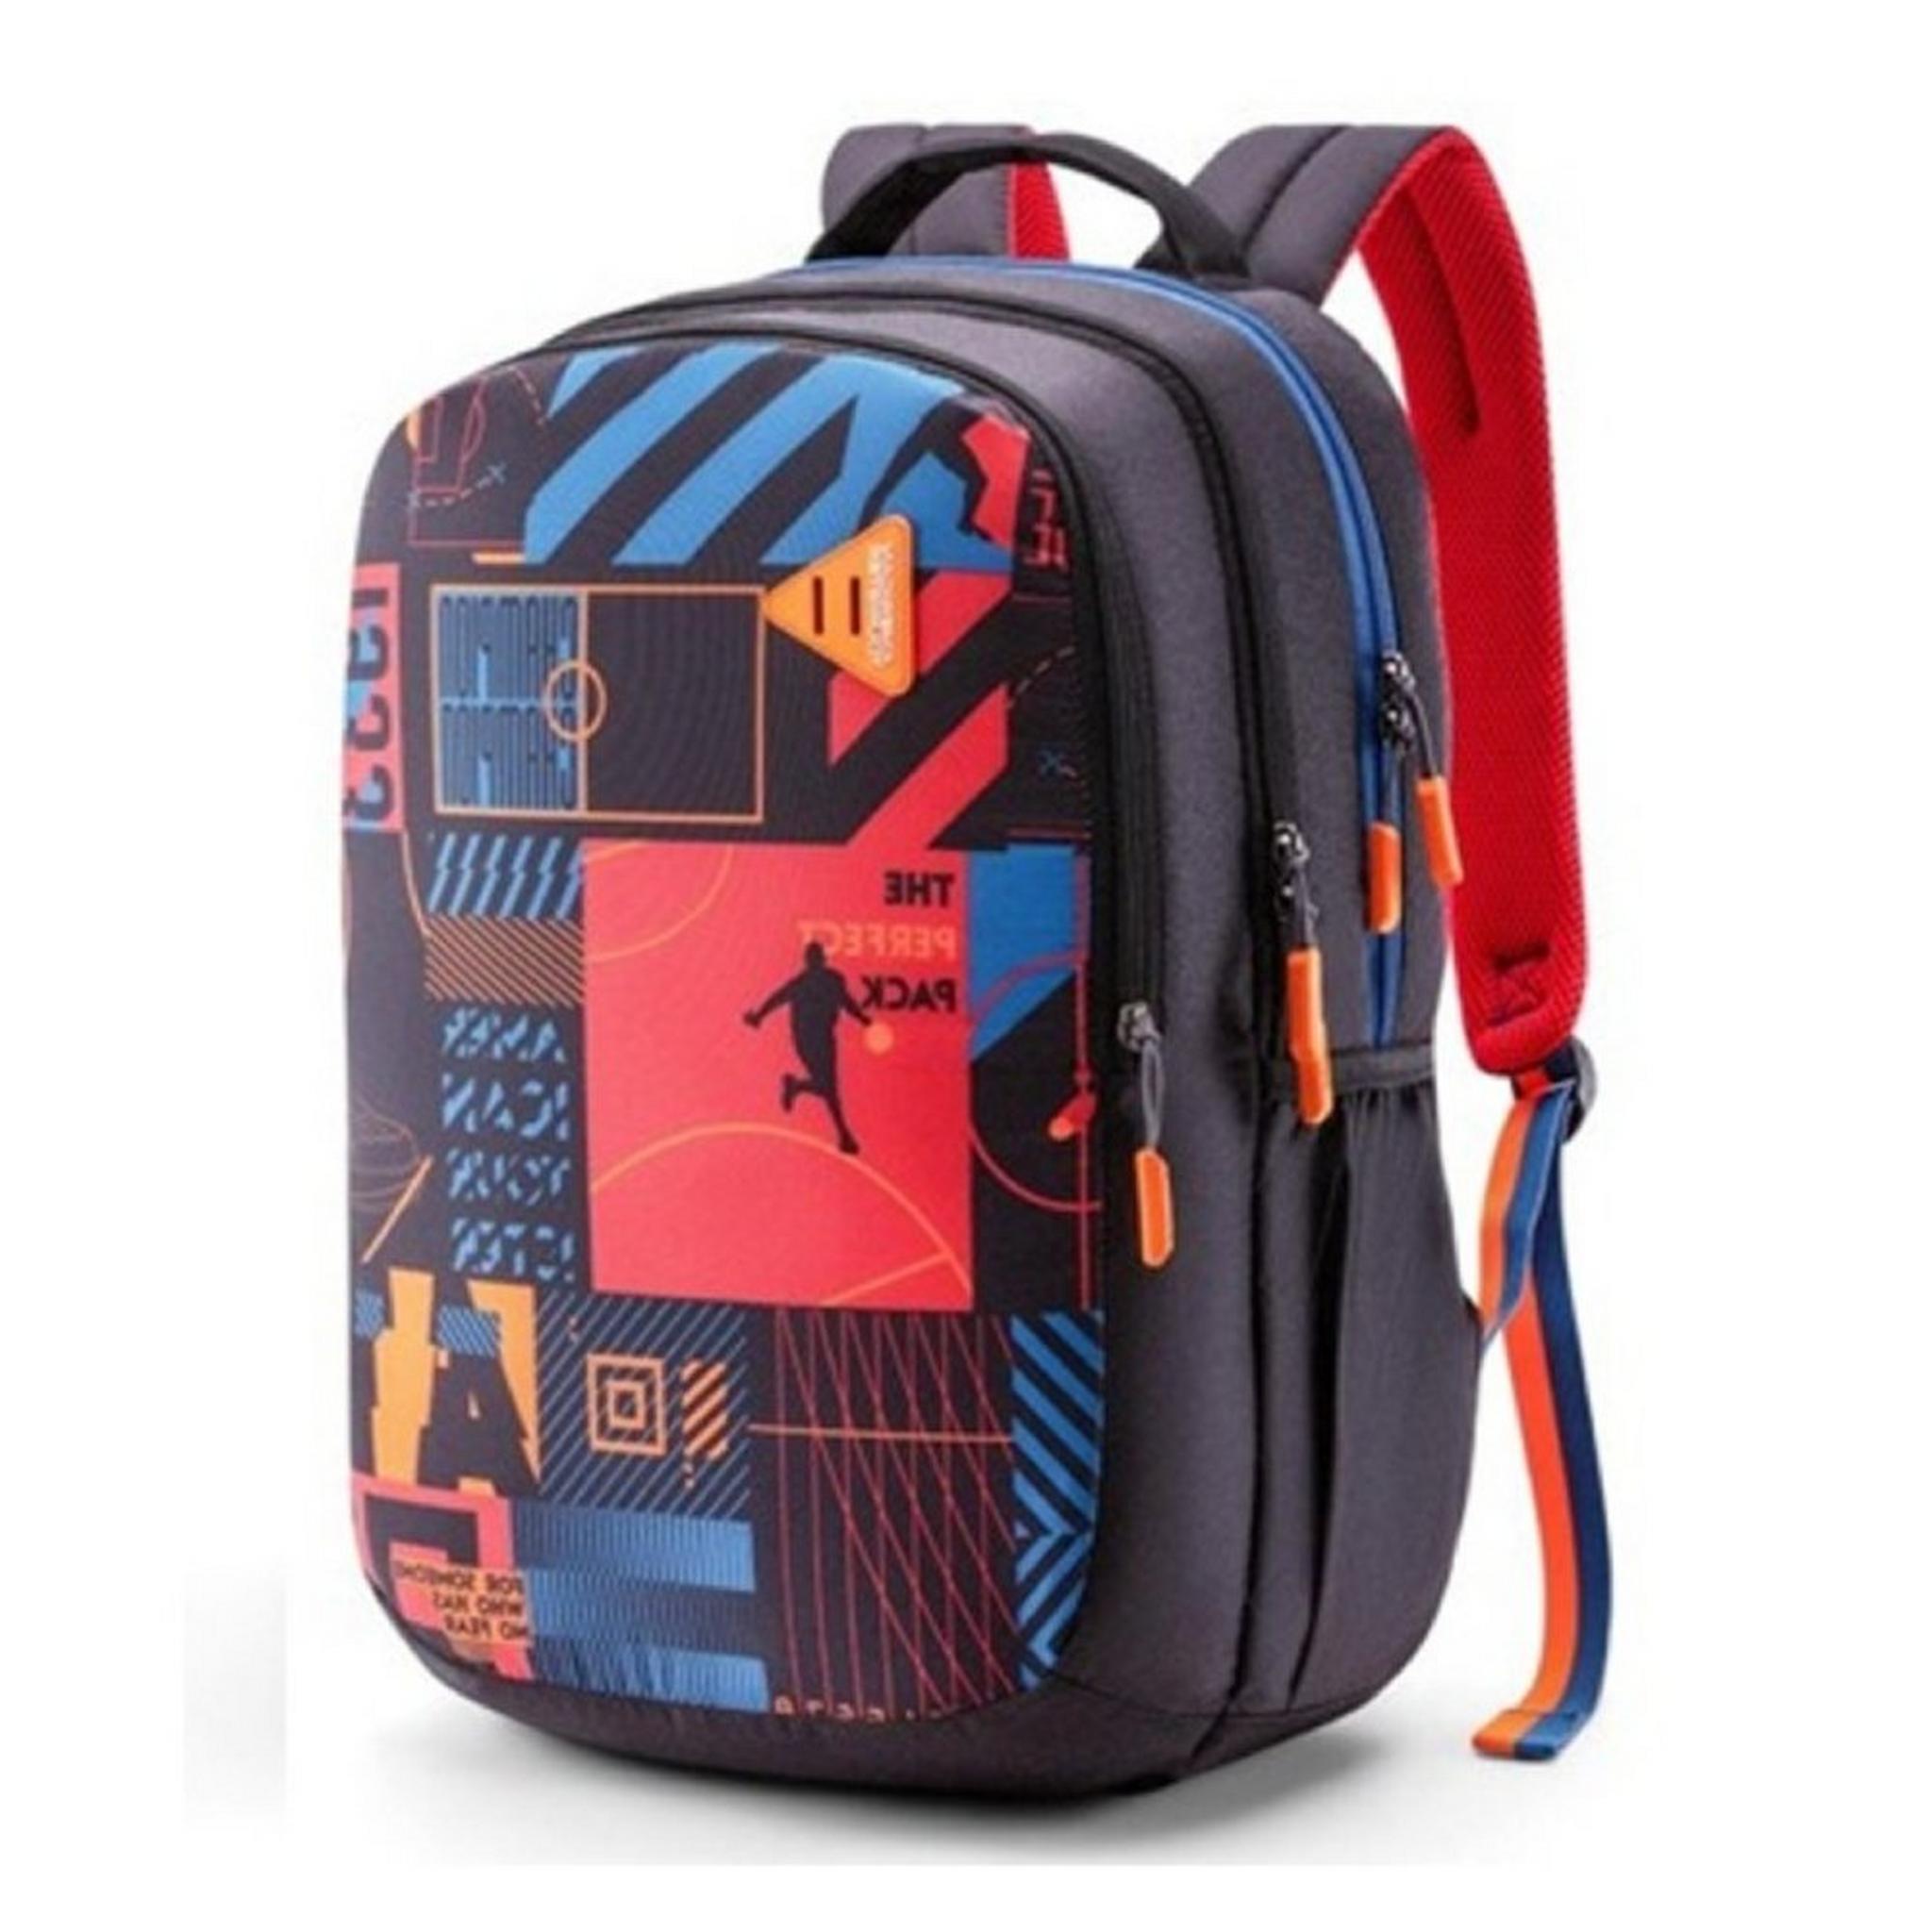 American Tourister Quad Plus Backpack - Multi-Color